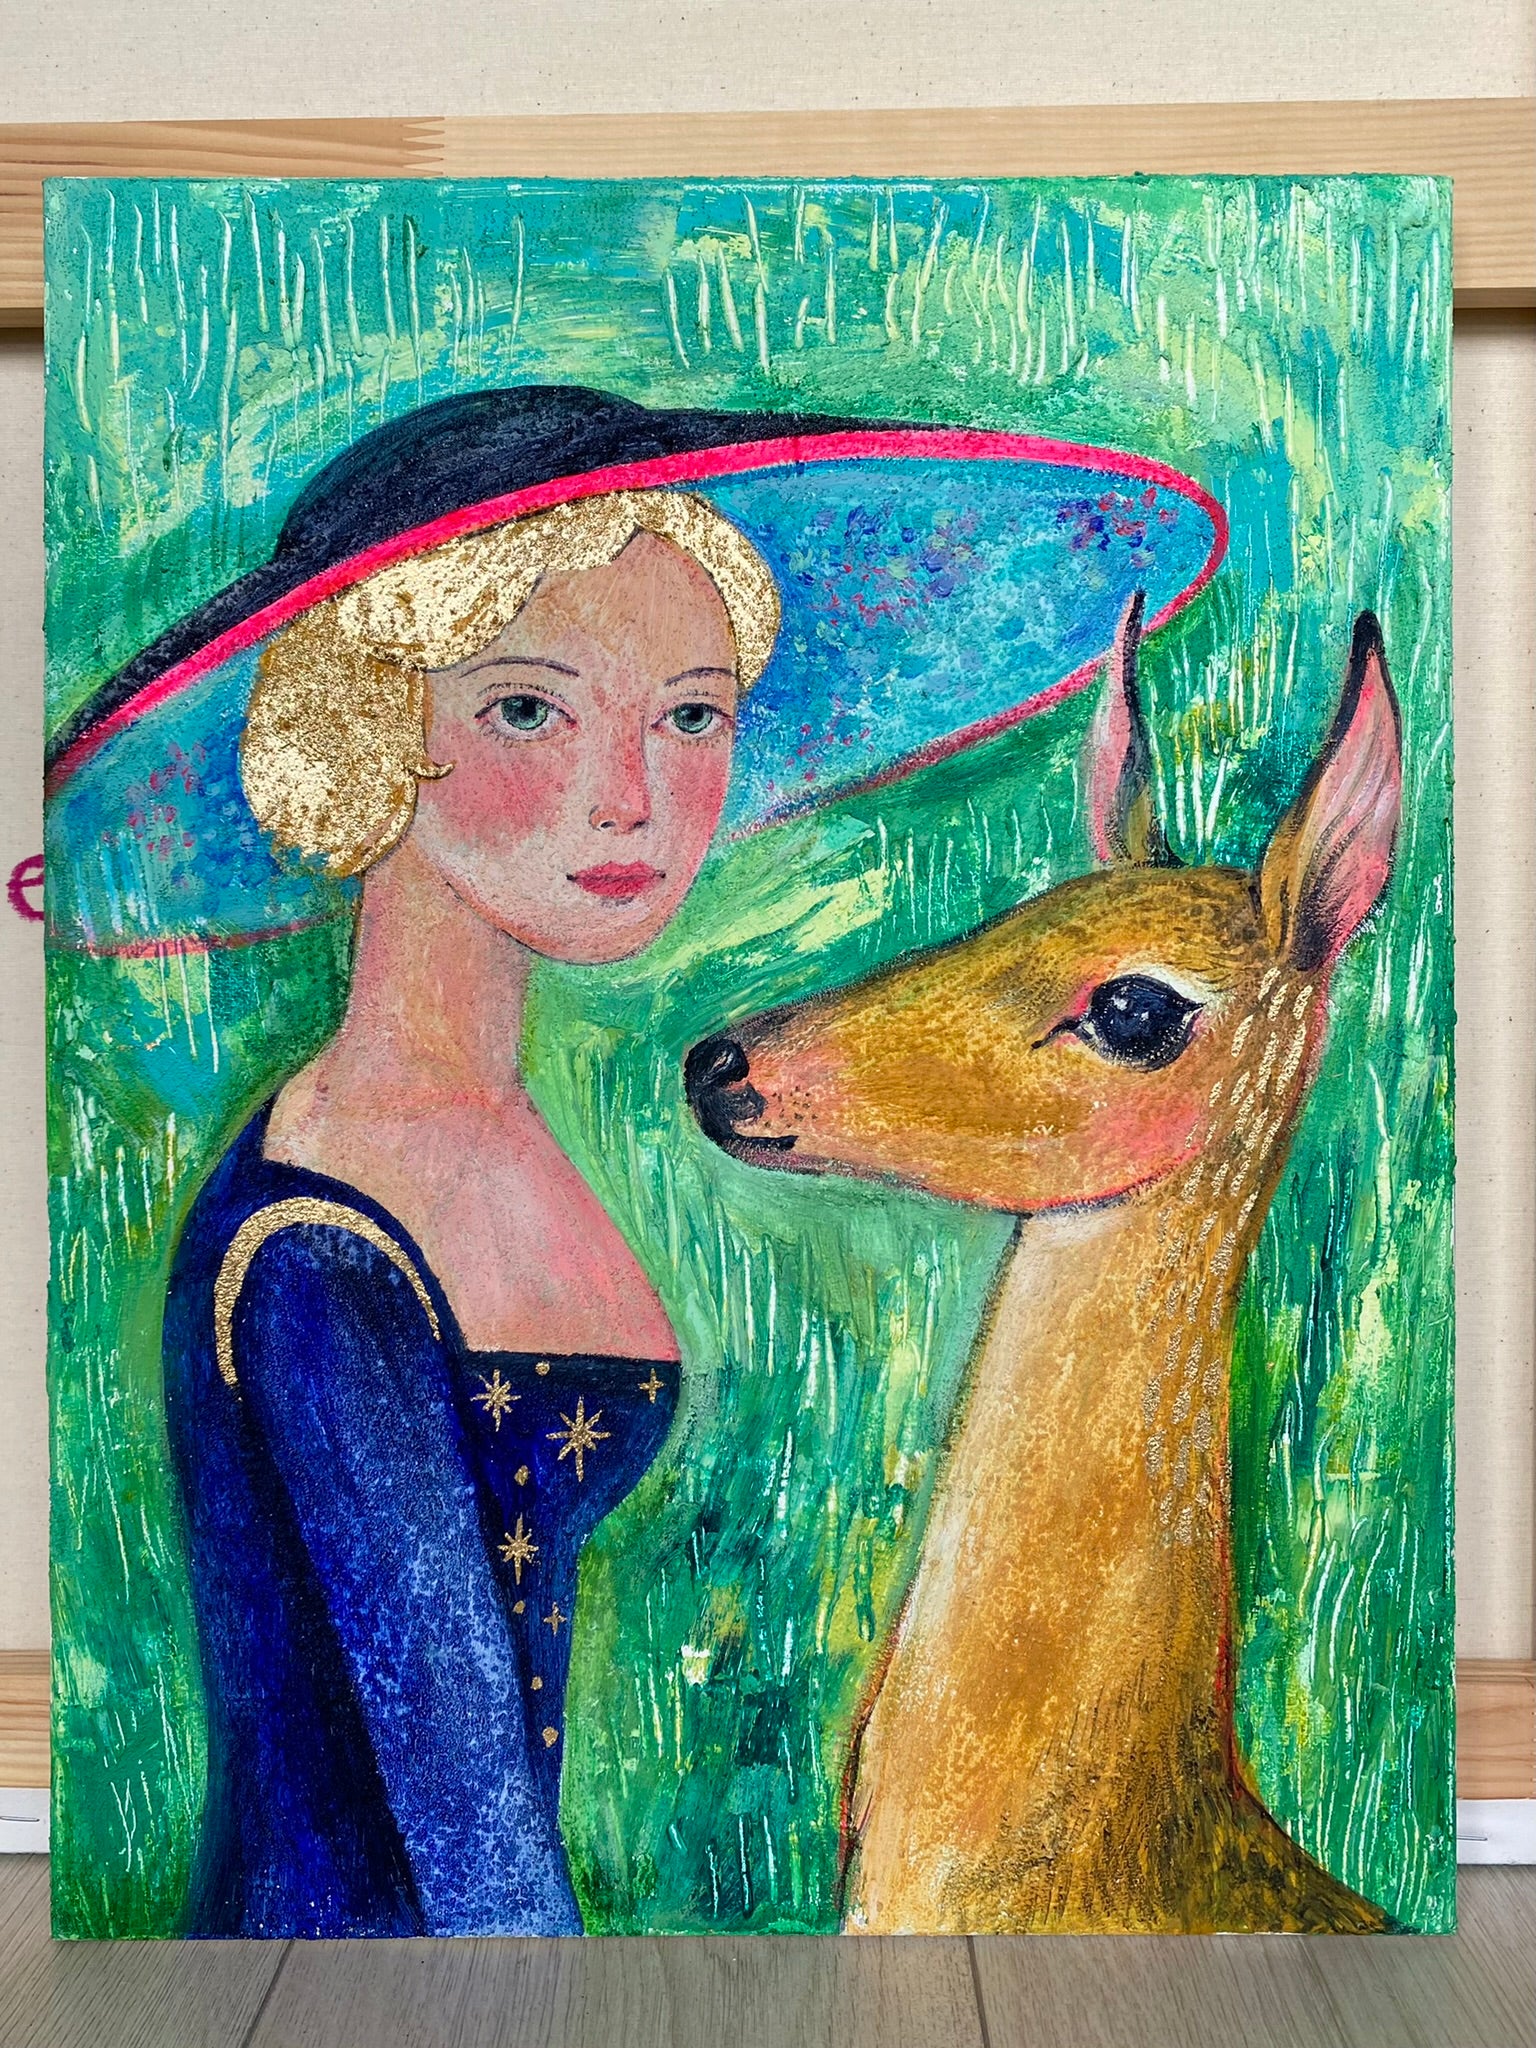 Lady with the deer (2021) by Sofiia Bortnikova